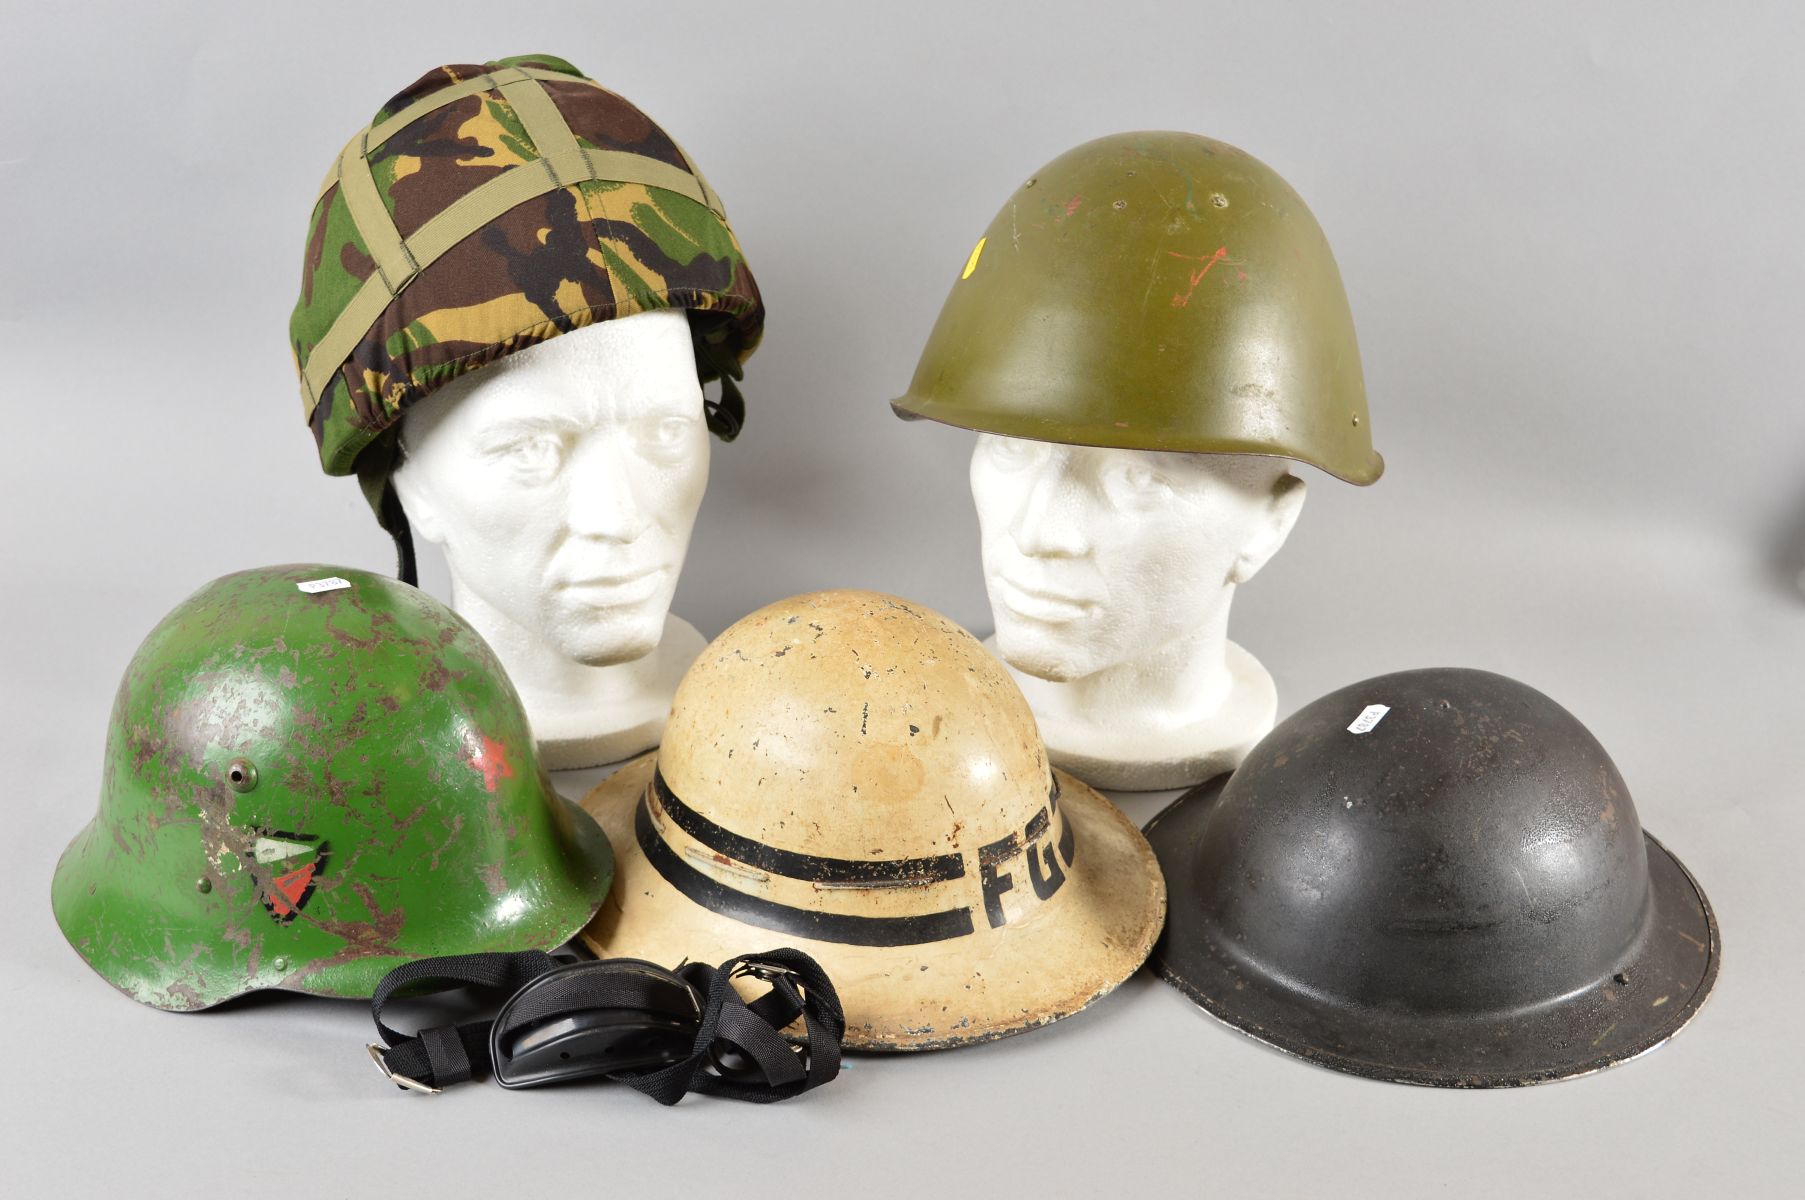 A BOX CONTAINING FIVE MILITARY HELMETS, as follows, Post War WWII era Eastern Block helmet, green